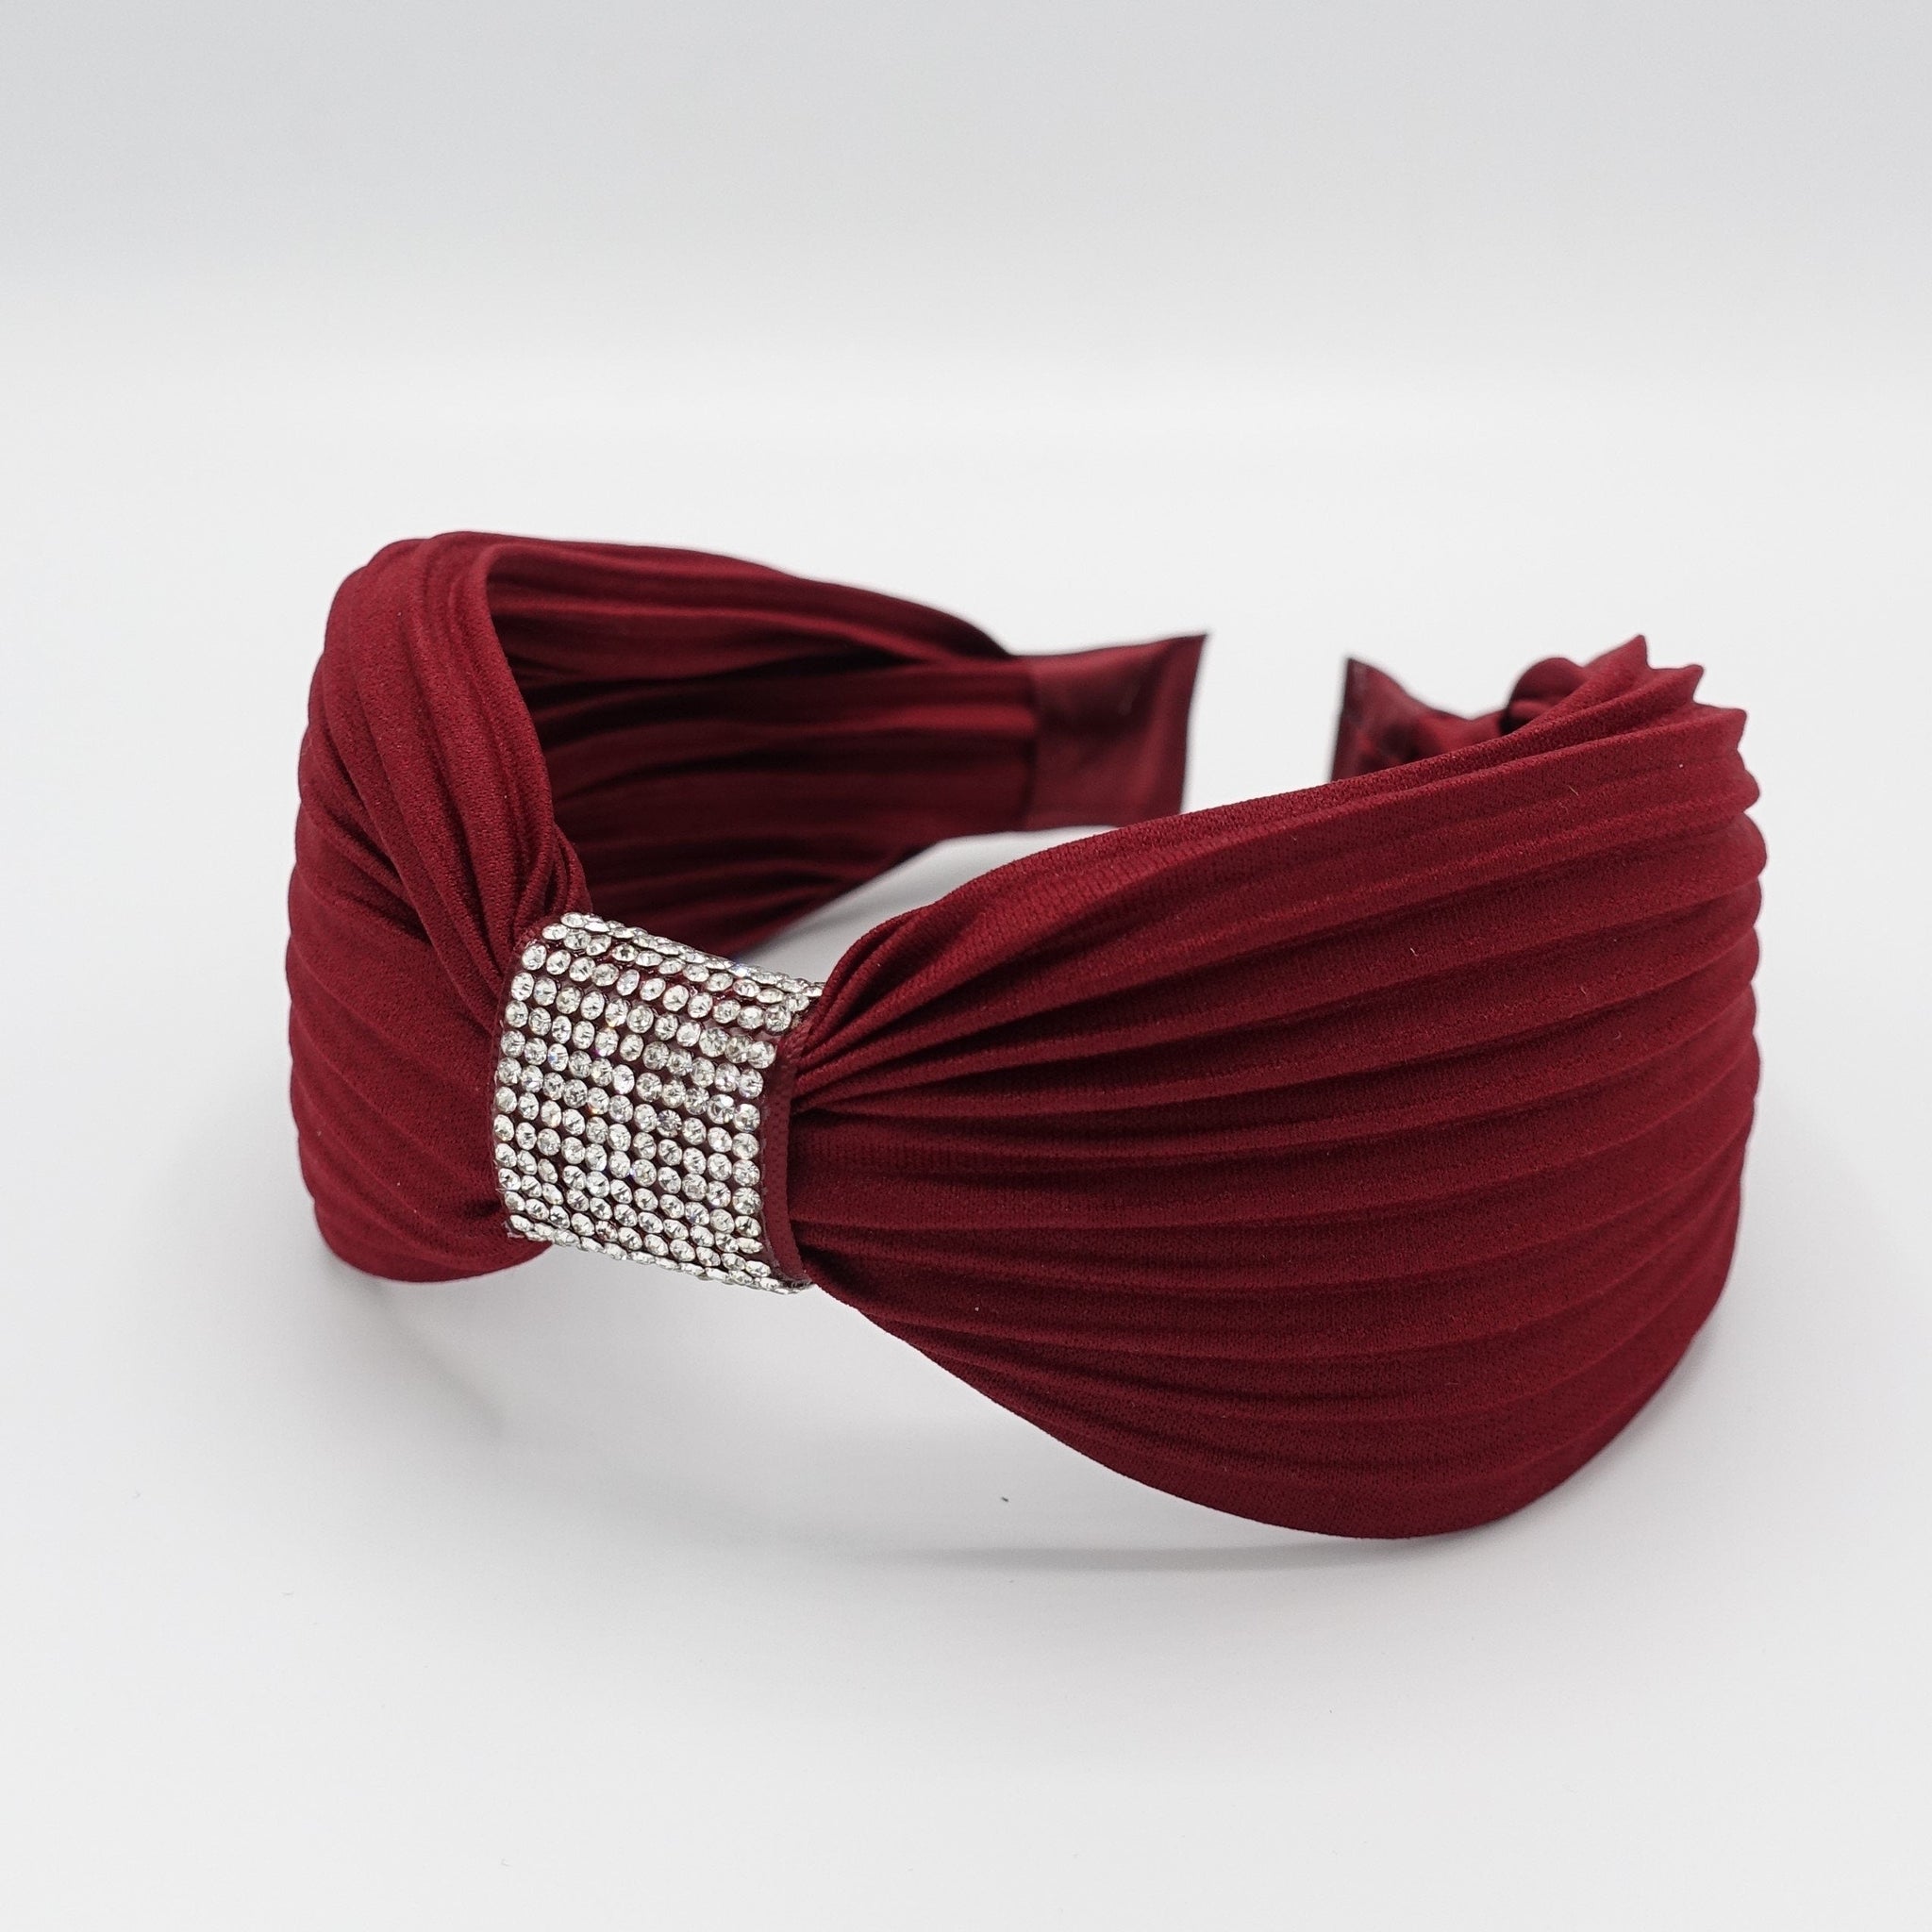 veryshine.com Headband Red wine pleated headband rhinestone decorated hairband woman hair accessory